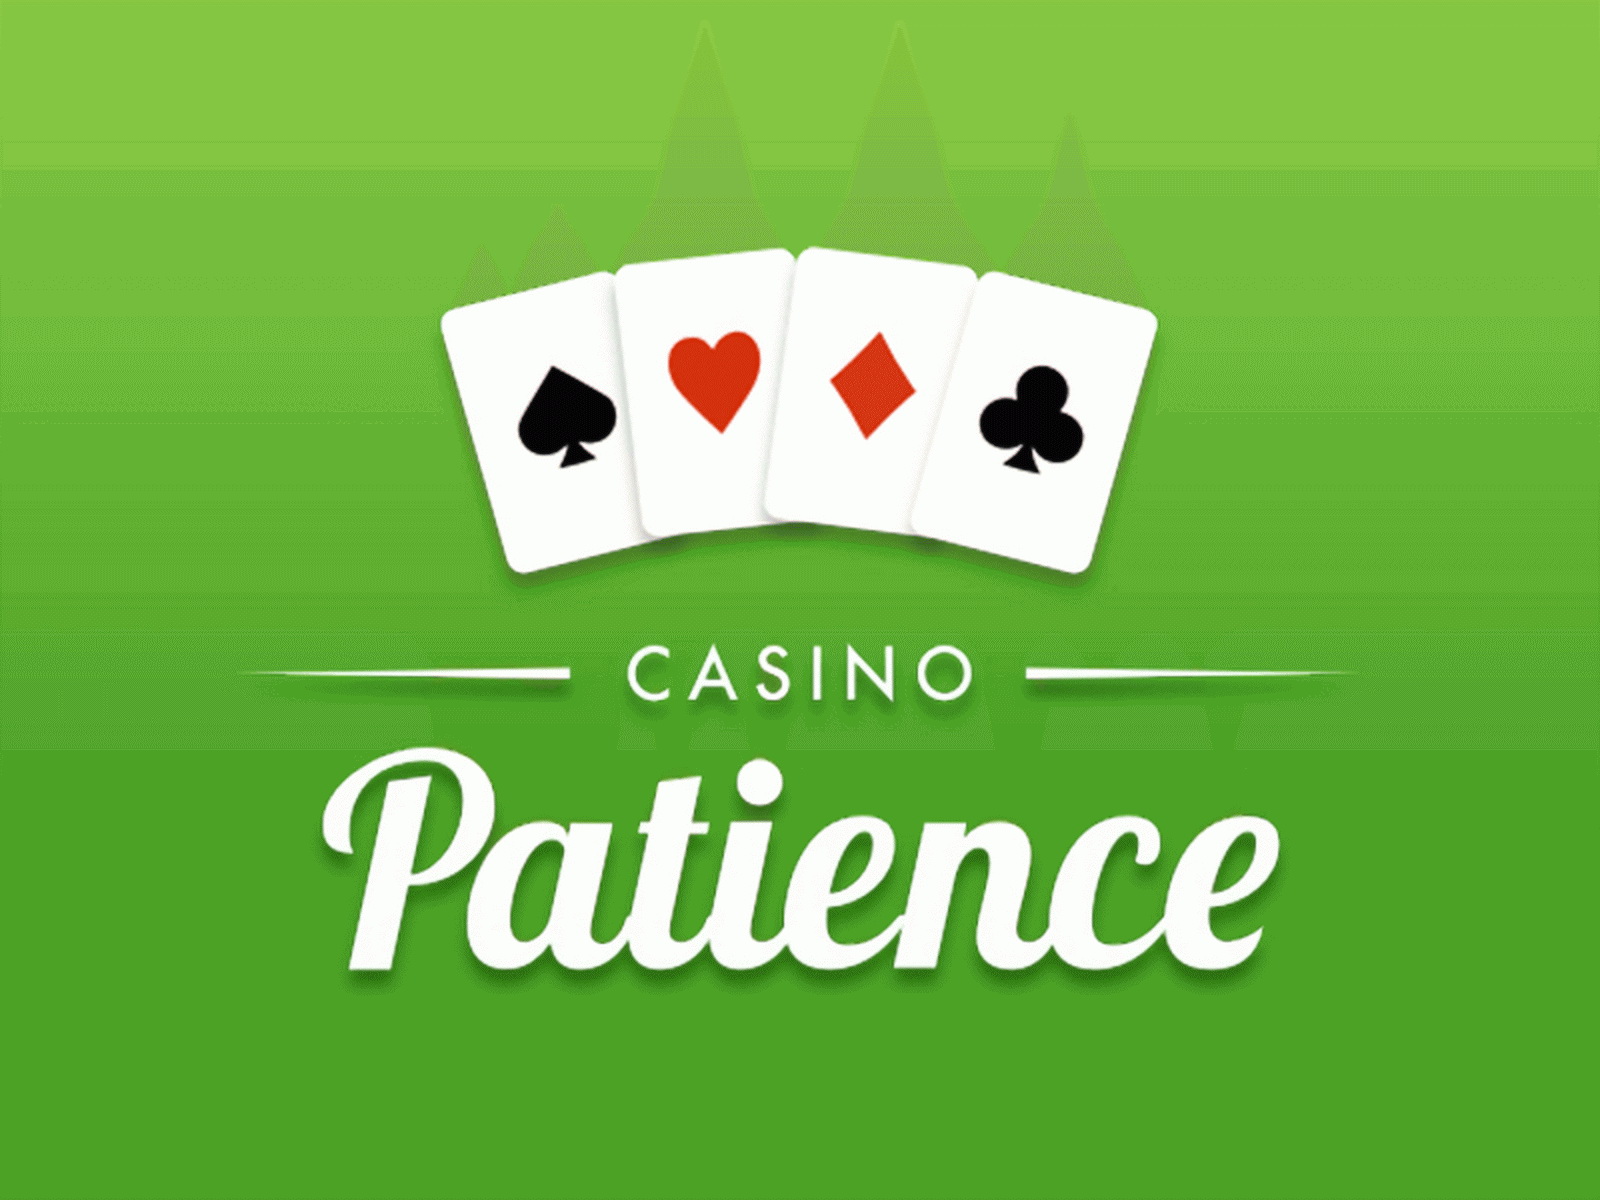 Casino Patience demo